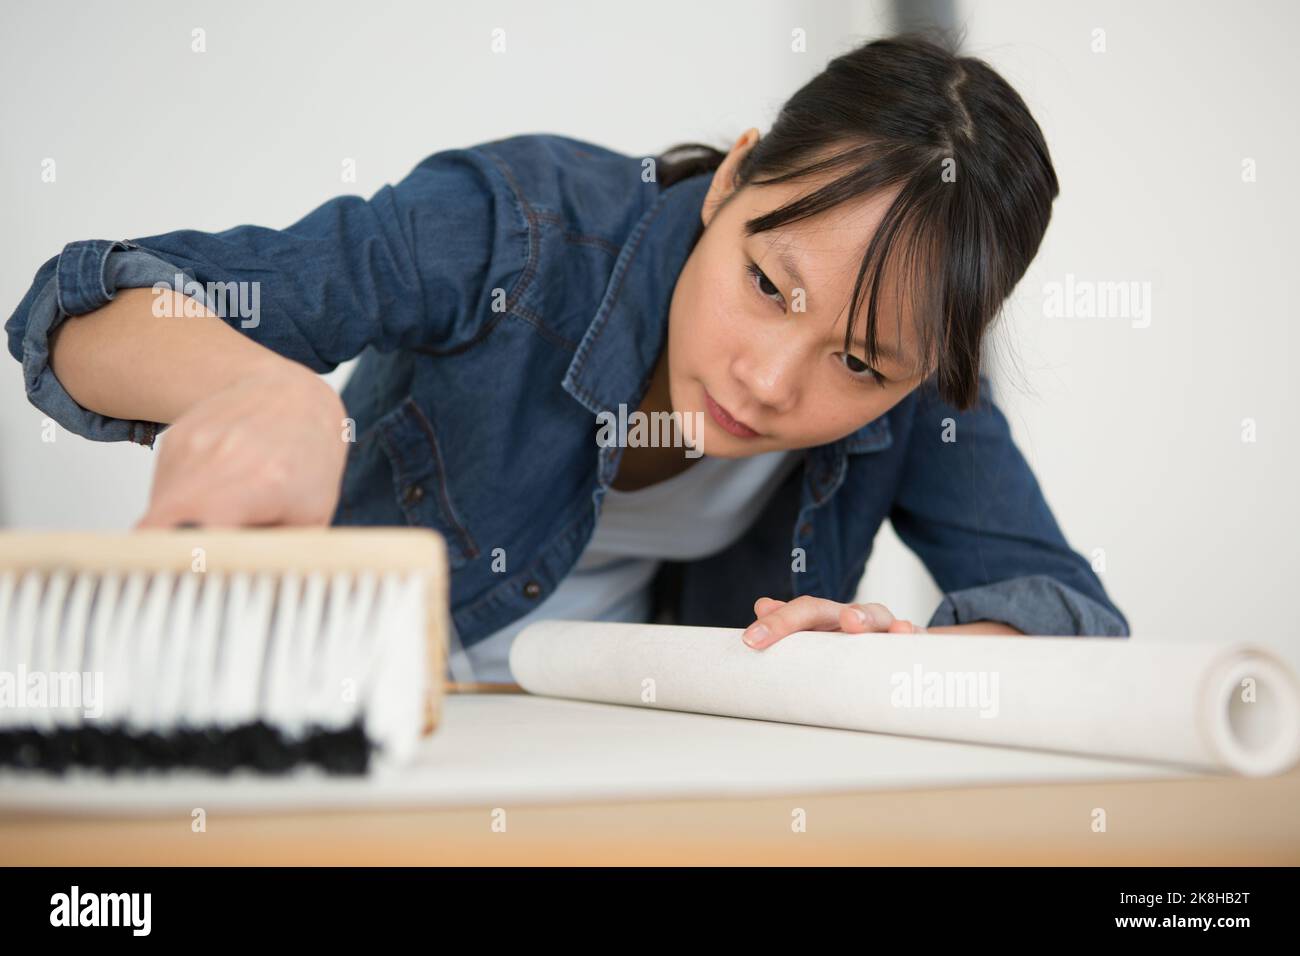 woman preparing for wallpaper work Stock Photo